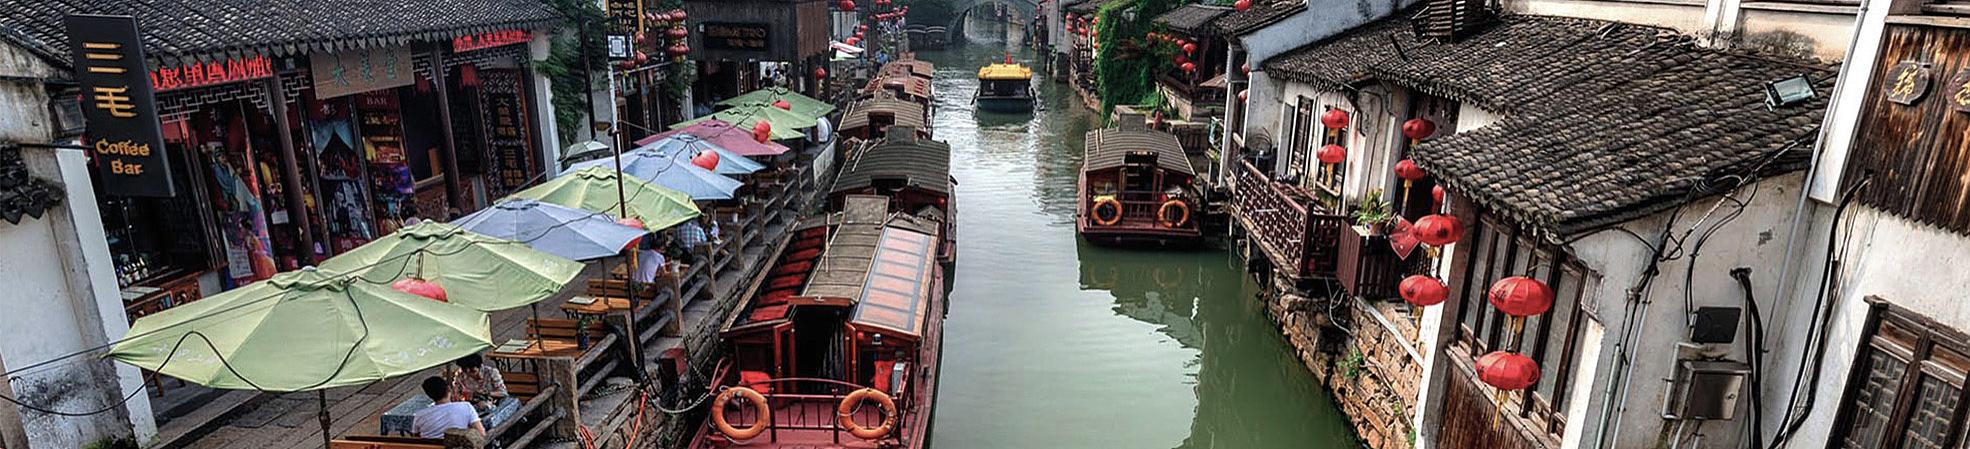 Local Lifestyle in Suzhou